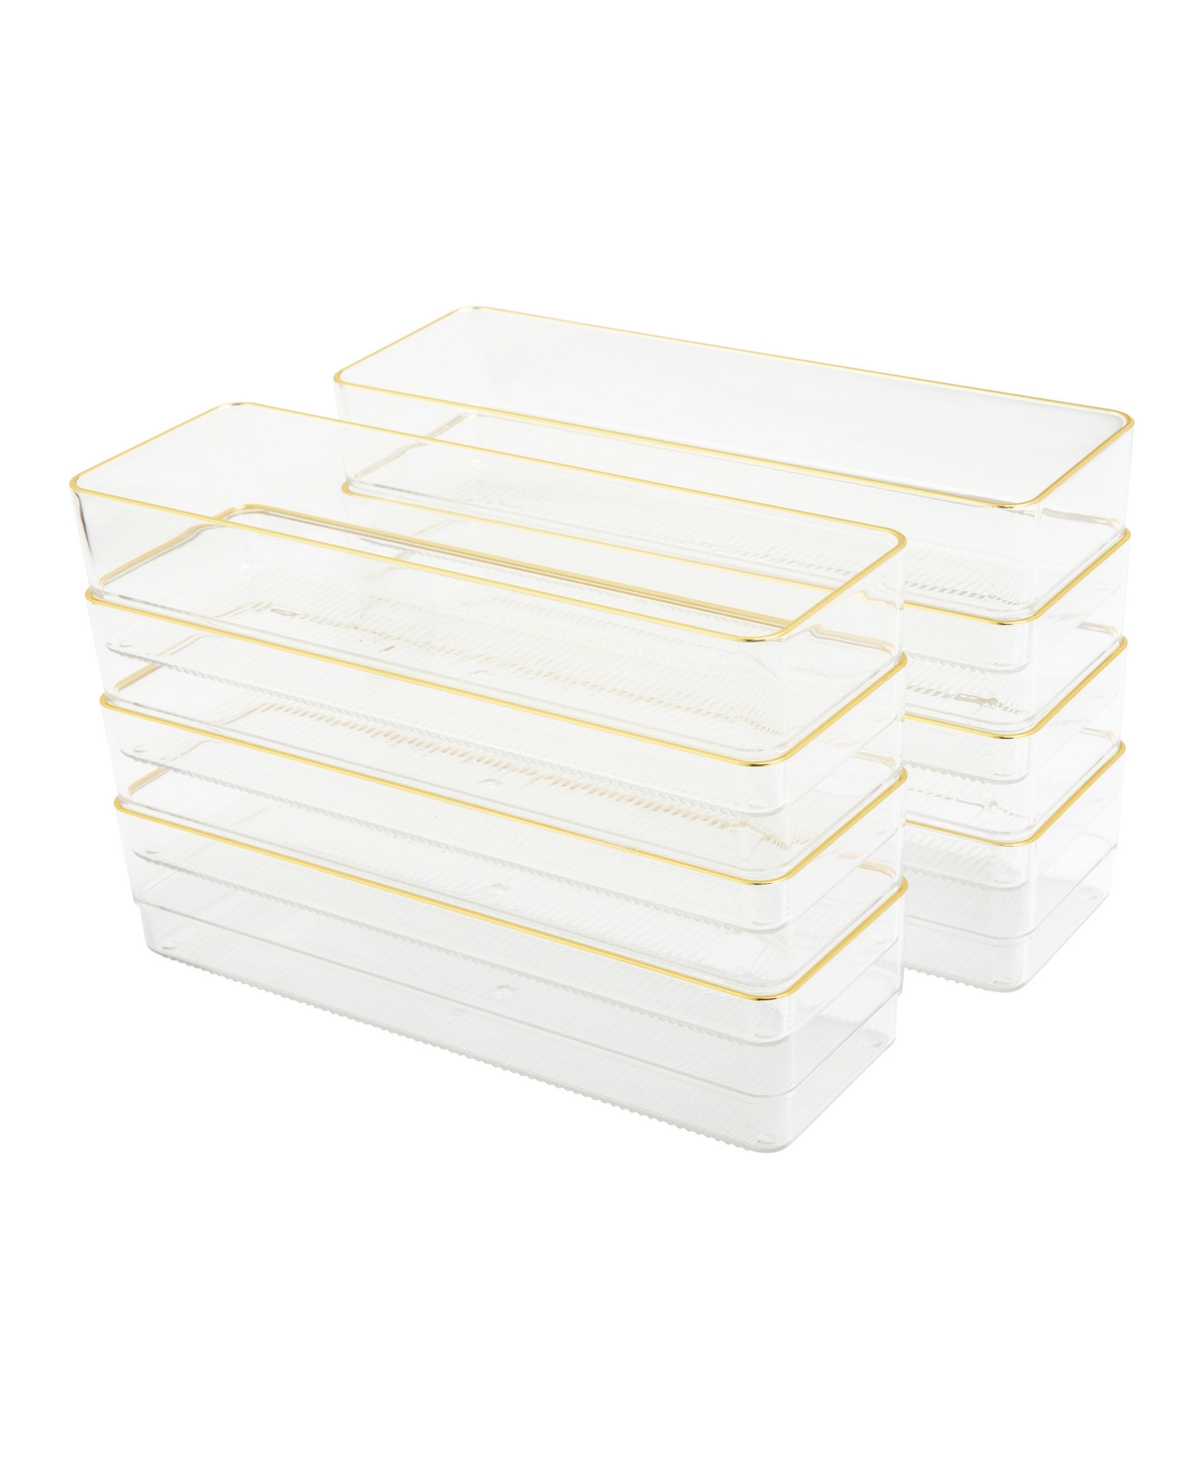 Martha Stewart Kerry 8 Piece Plastic Stackable Office Desk Drawer Organizers, 9" X 3" In Clear,gold Trim